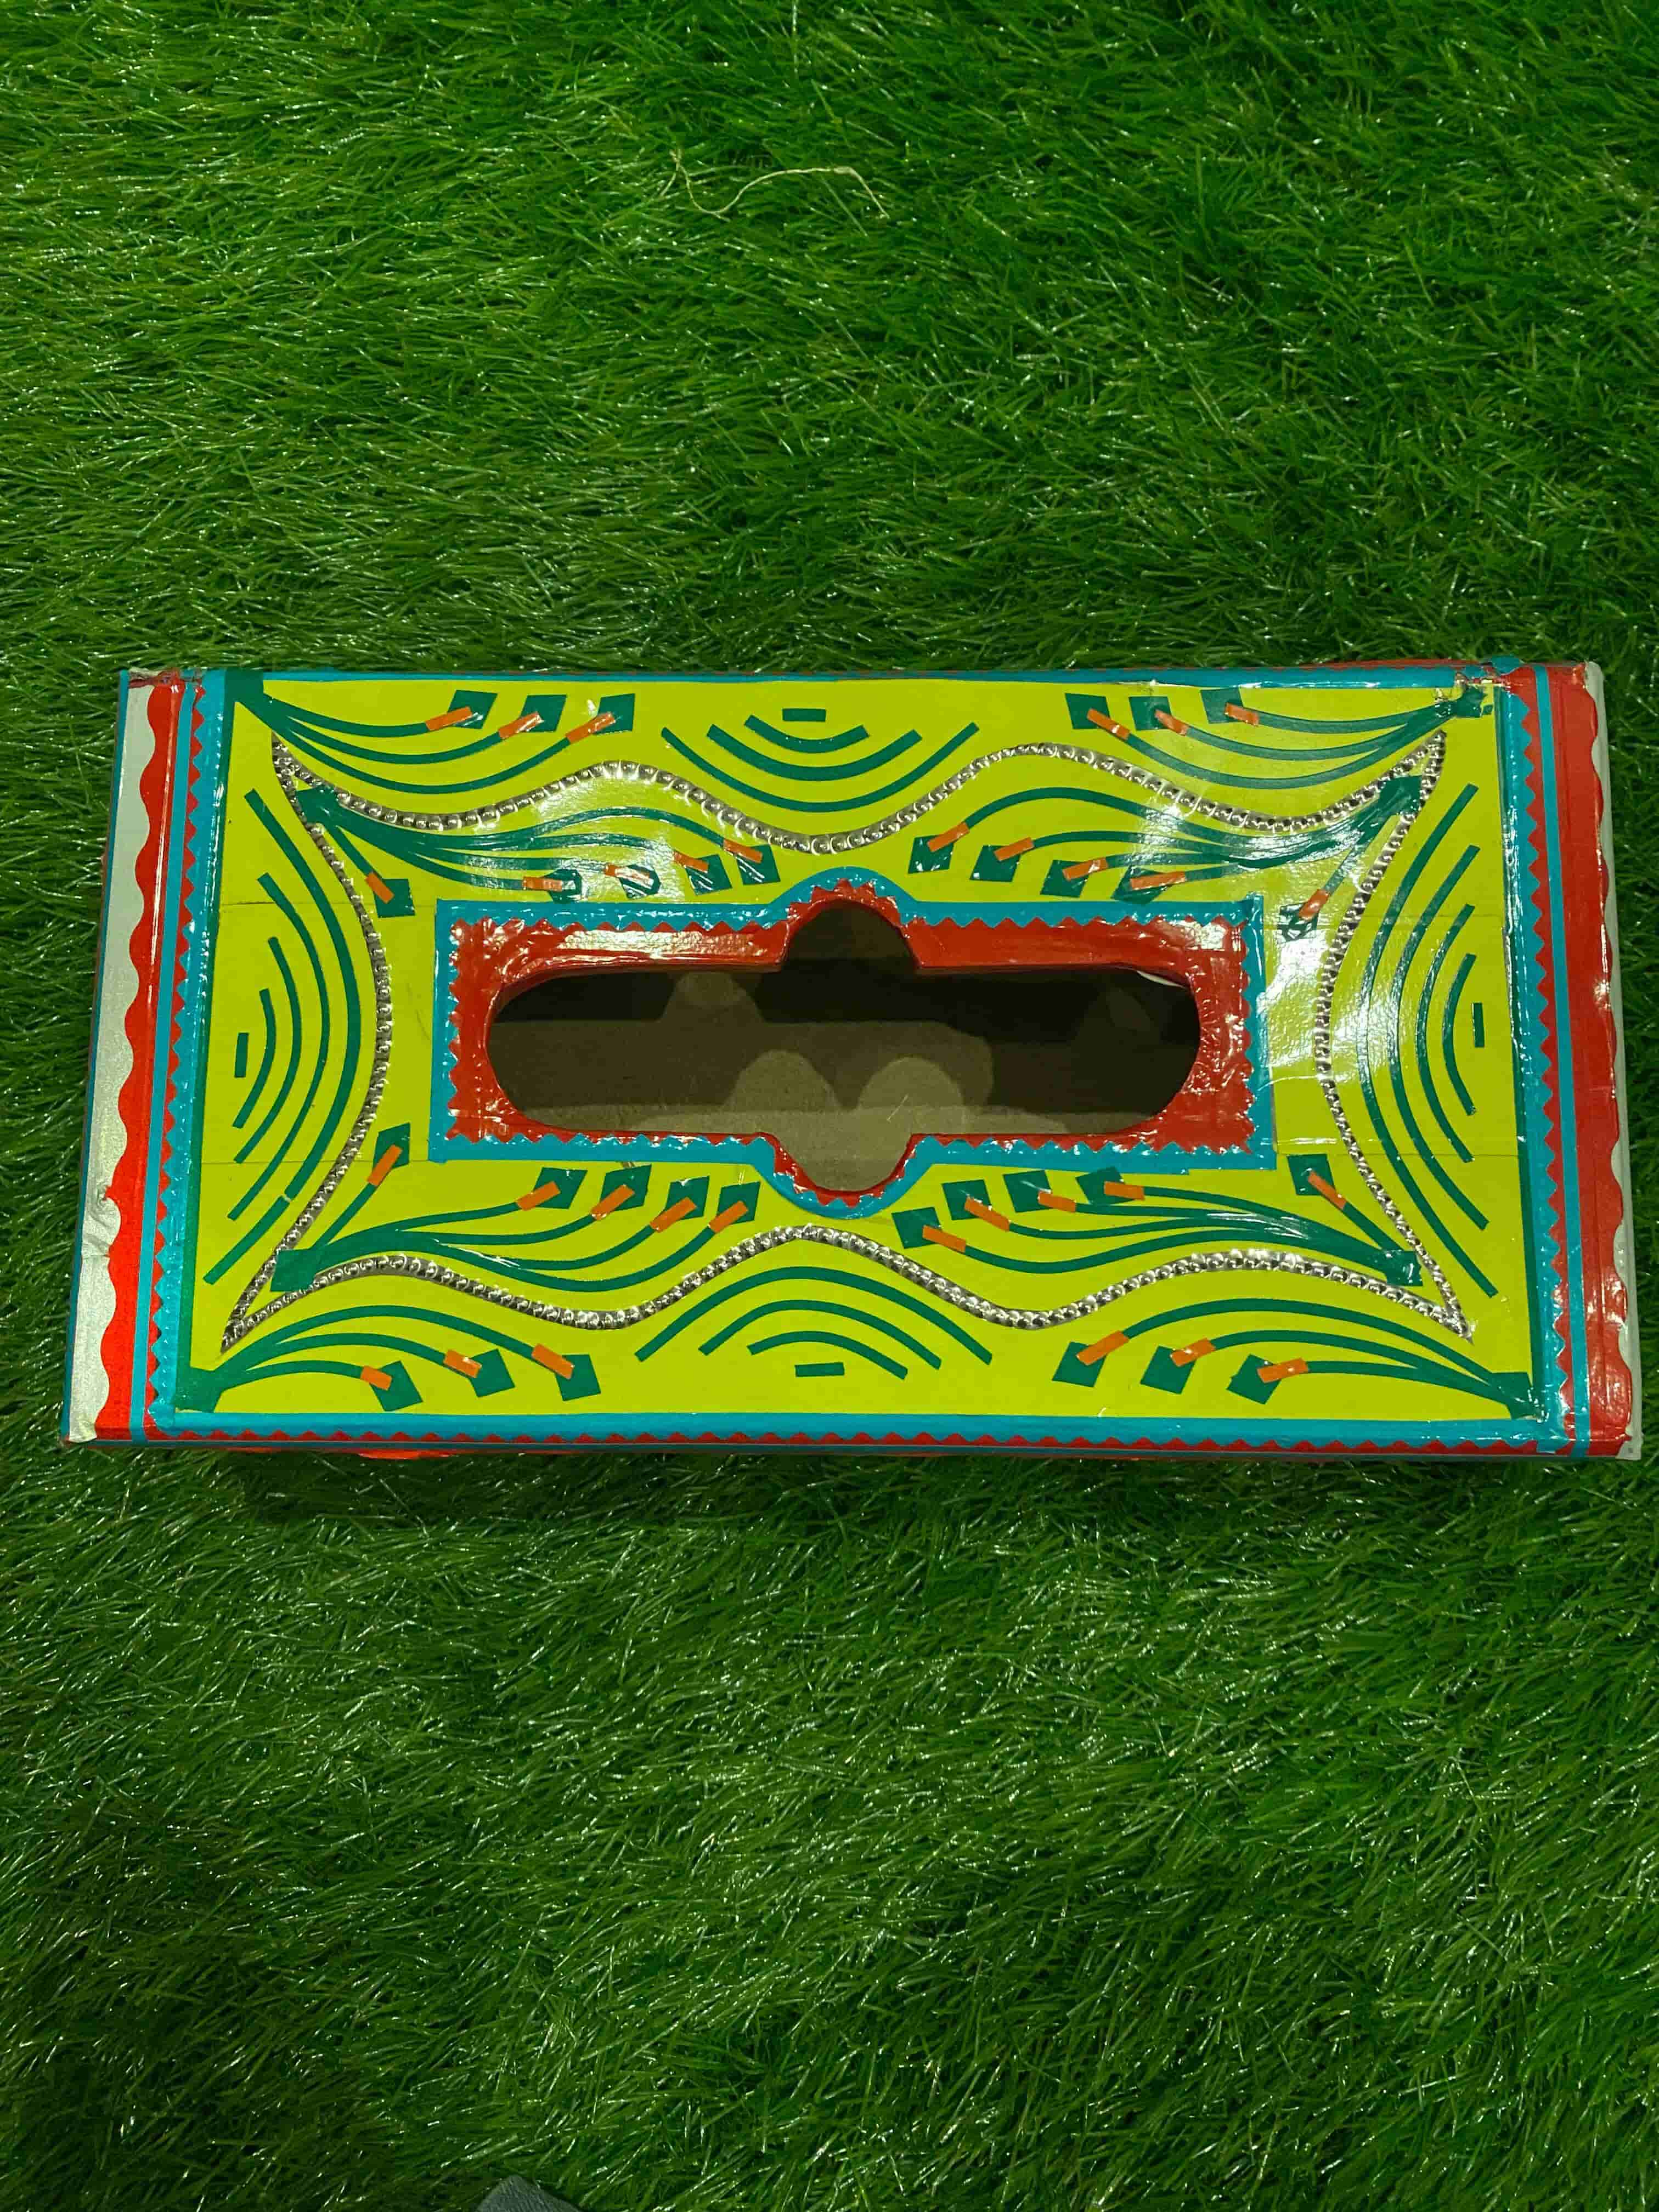 tradition-pakistan-chamakpatti-yellow-tissue-box.-naksh-decor-home-decor-tissue-boxes-truck-art-1